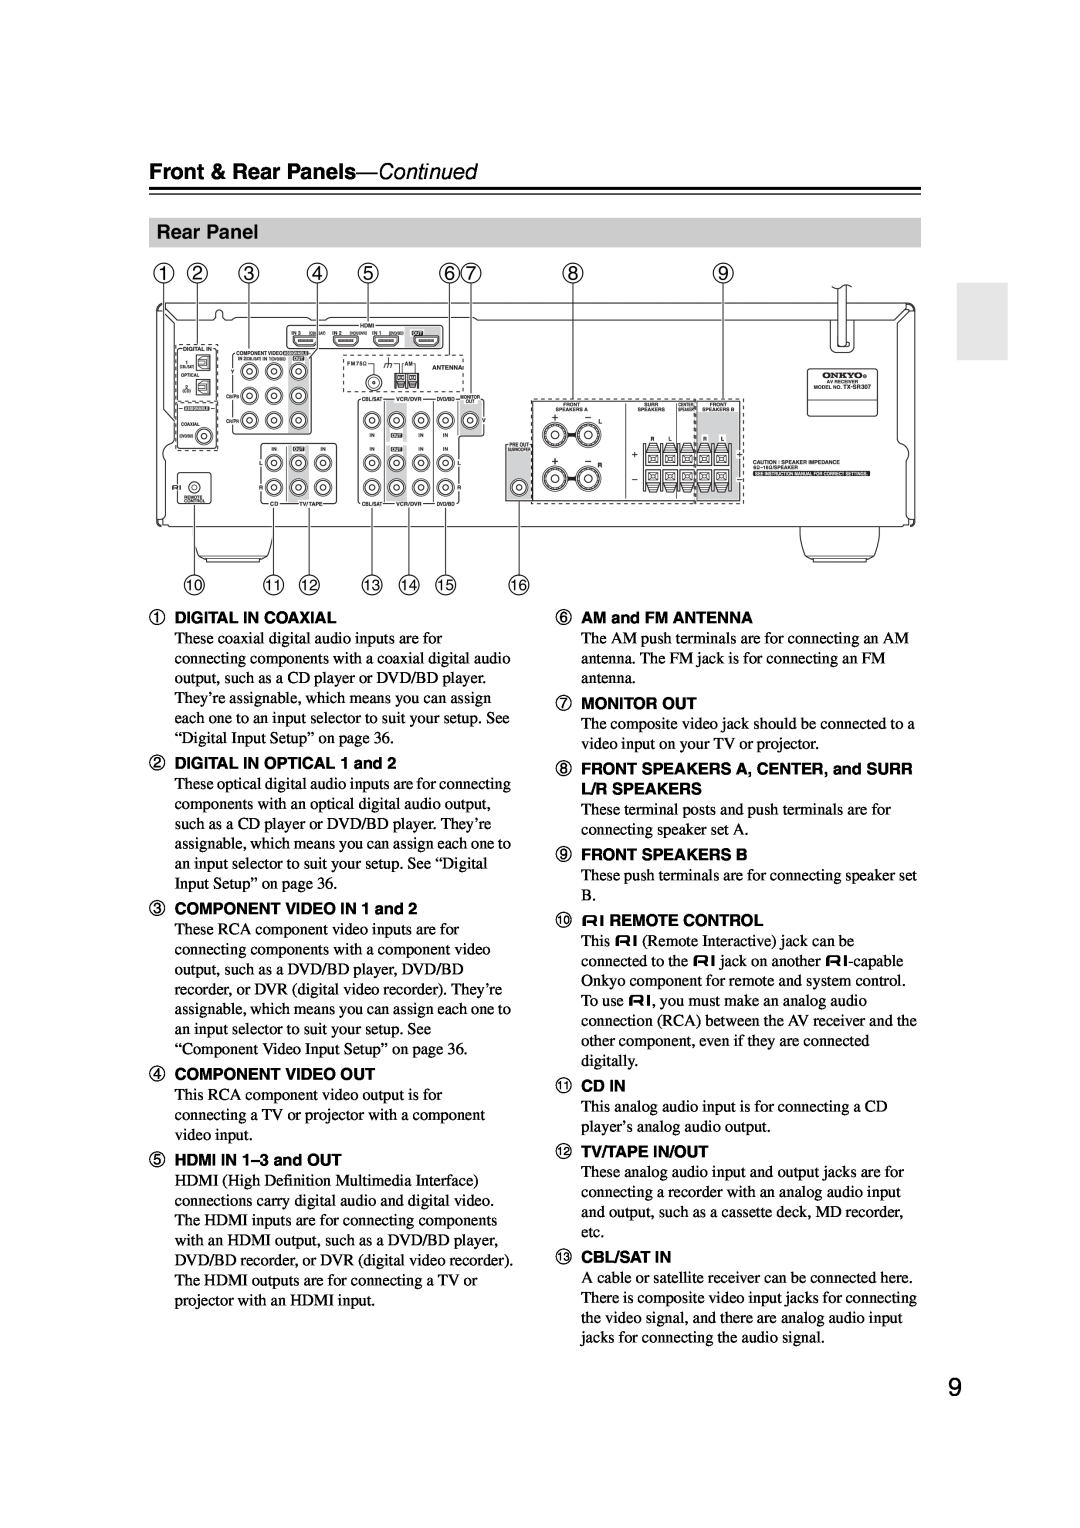 Onkyo TXSR307 instruction manual Front & Rear Panels-Continued, a b c d e fg, j k l m n o p 